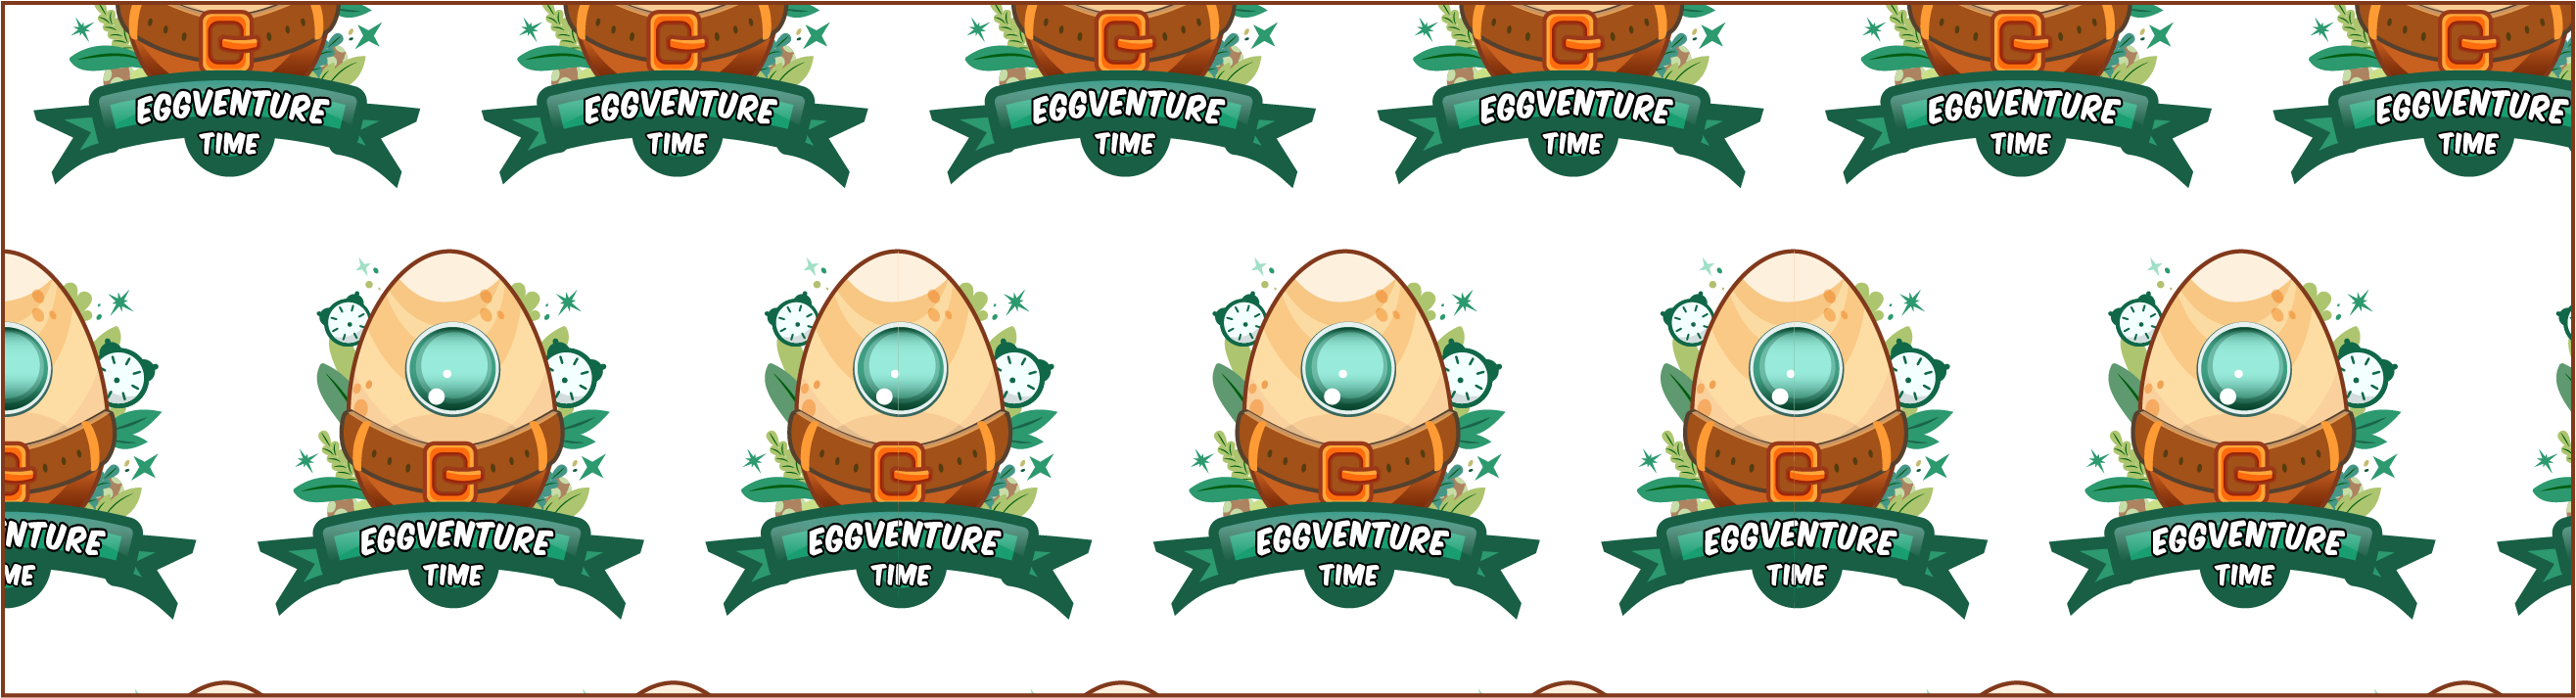 Eggventure Time